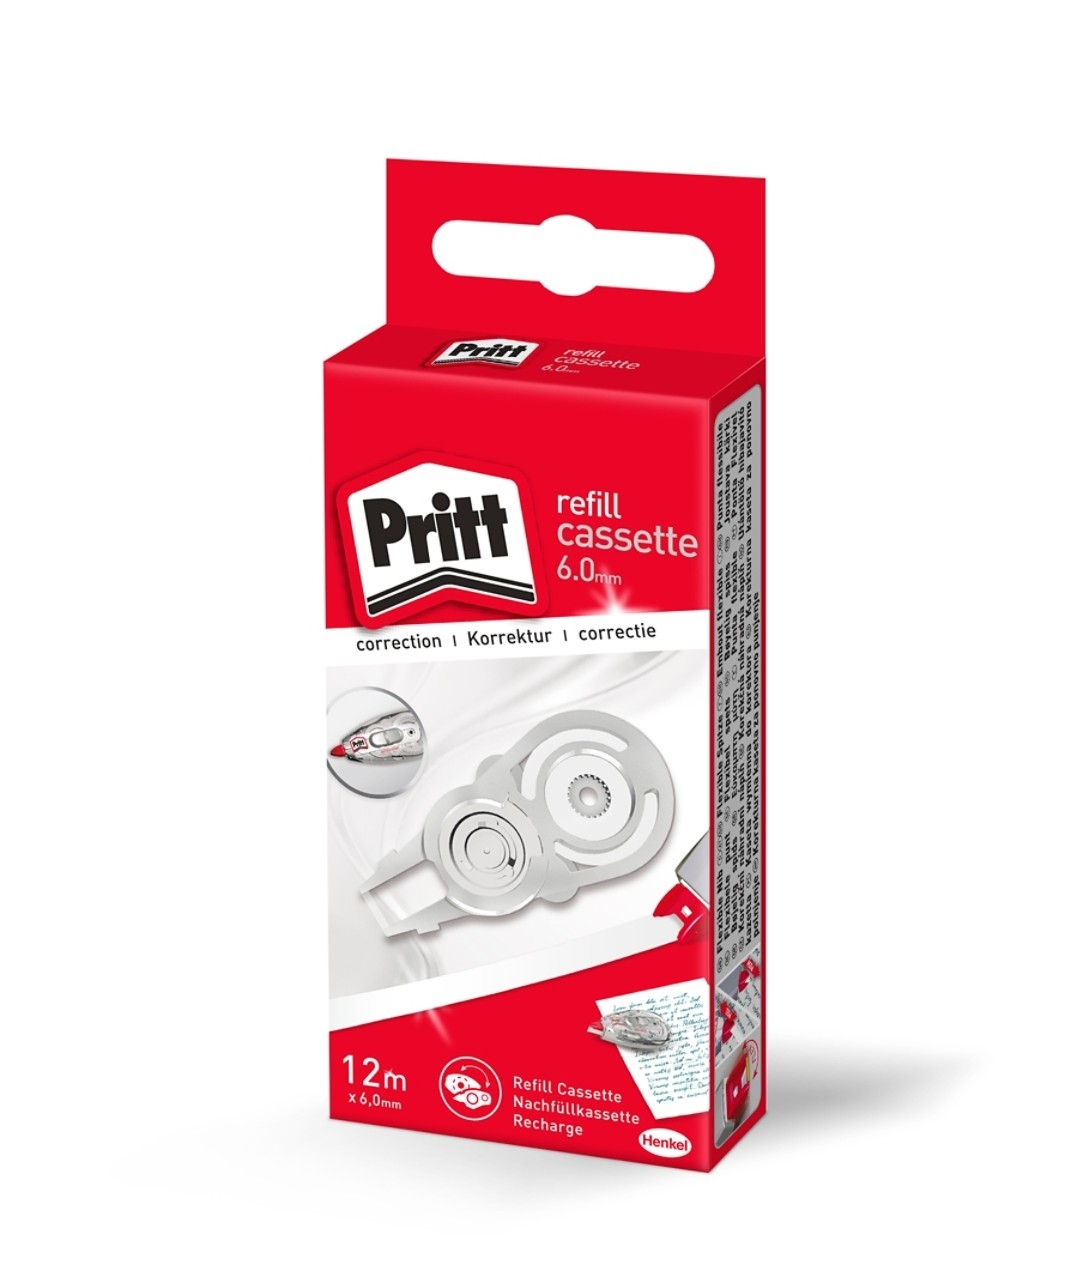 PRITT Cassette reill 6.0mmx12m PRX6H blanc, pour roller correcteur blanc, pour roller correcteur